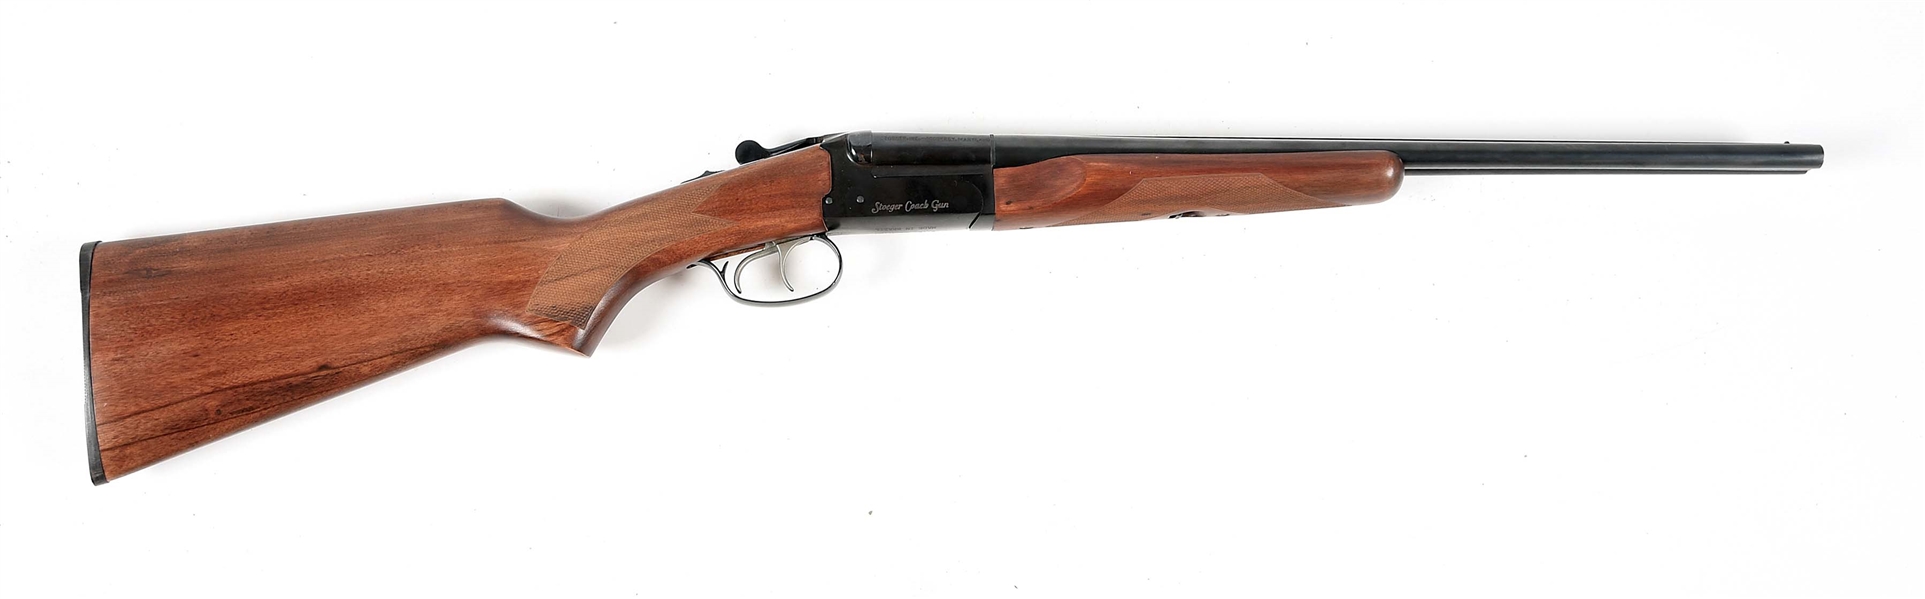 (M) STOEGER AMANTINO COACH GUN .410 SIDE BY SIDE SHOTGUN.